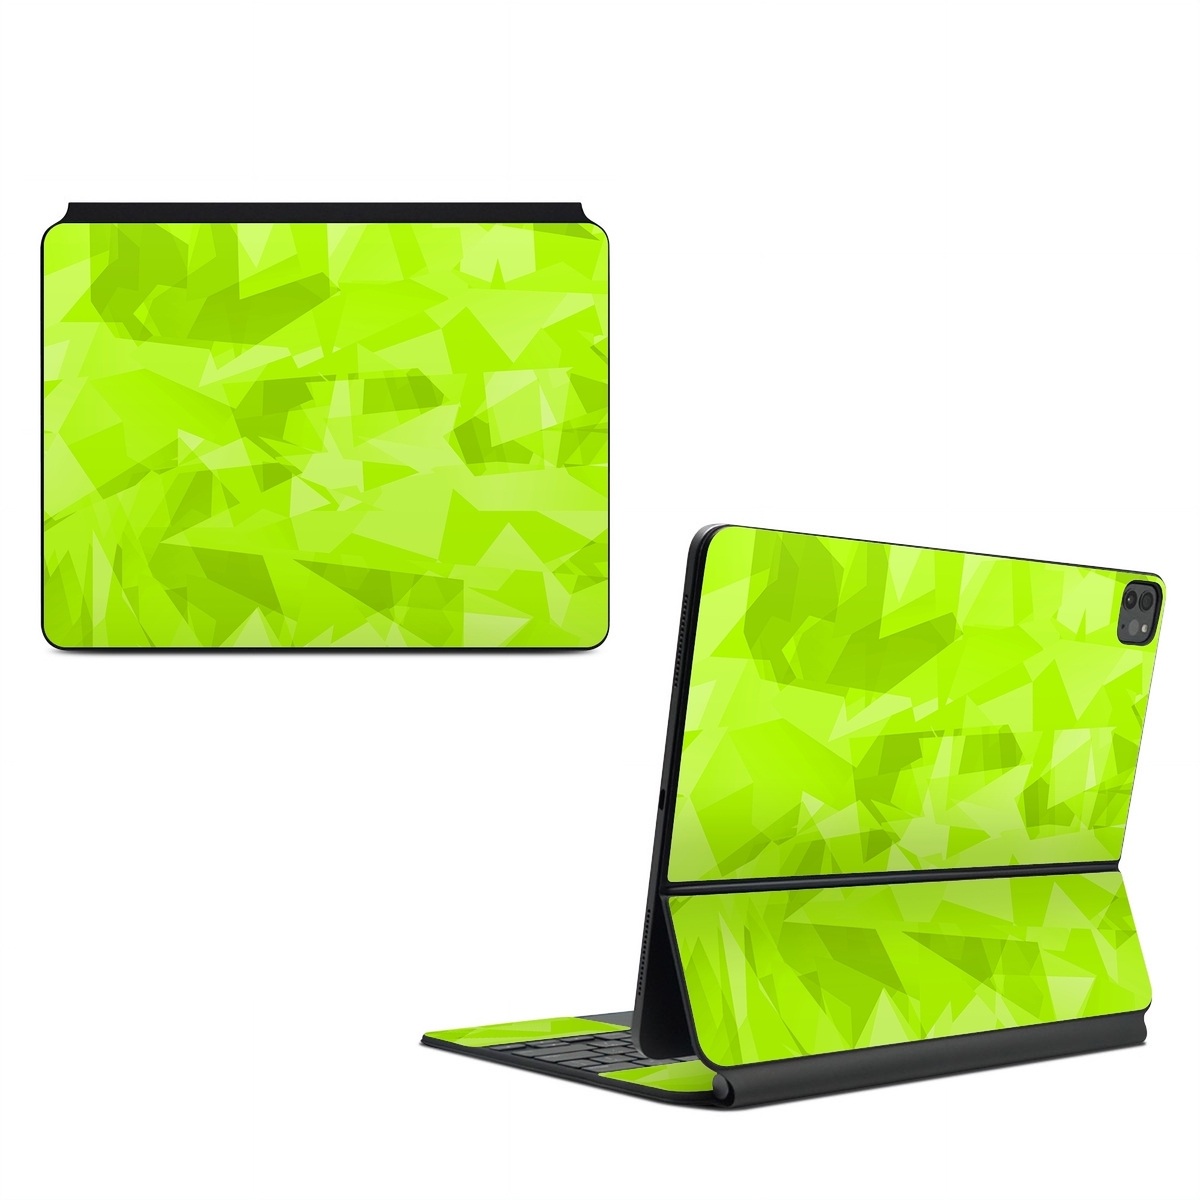 Magic Keyboard for iPad Series Skin design, with green colors